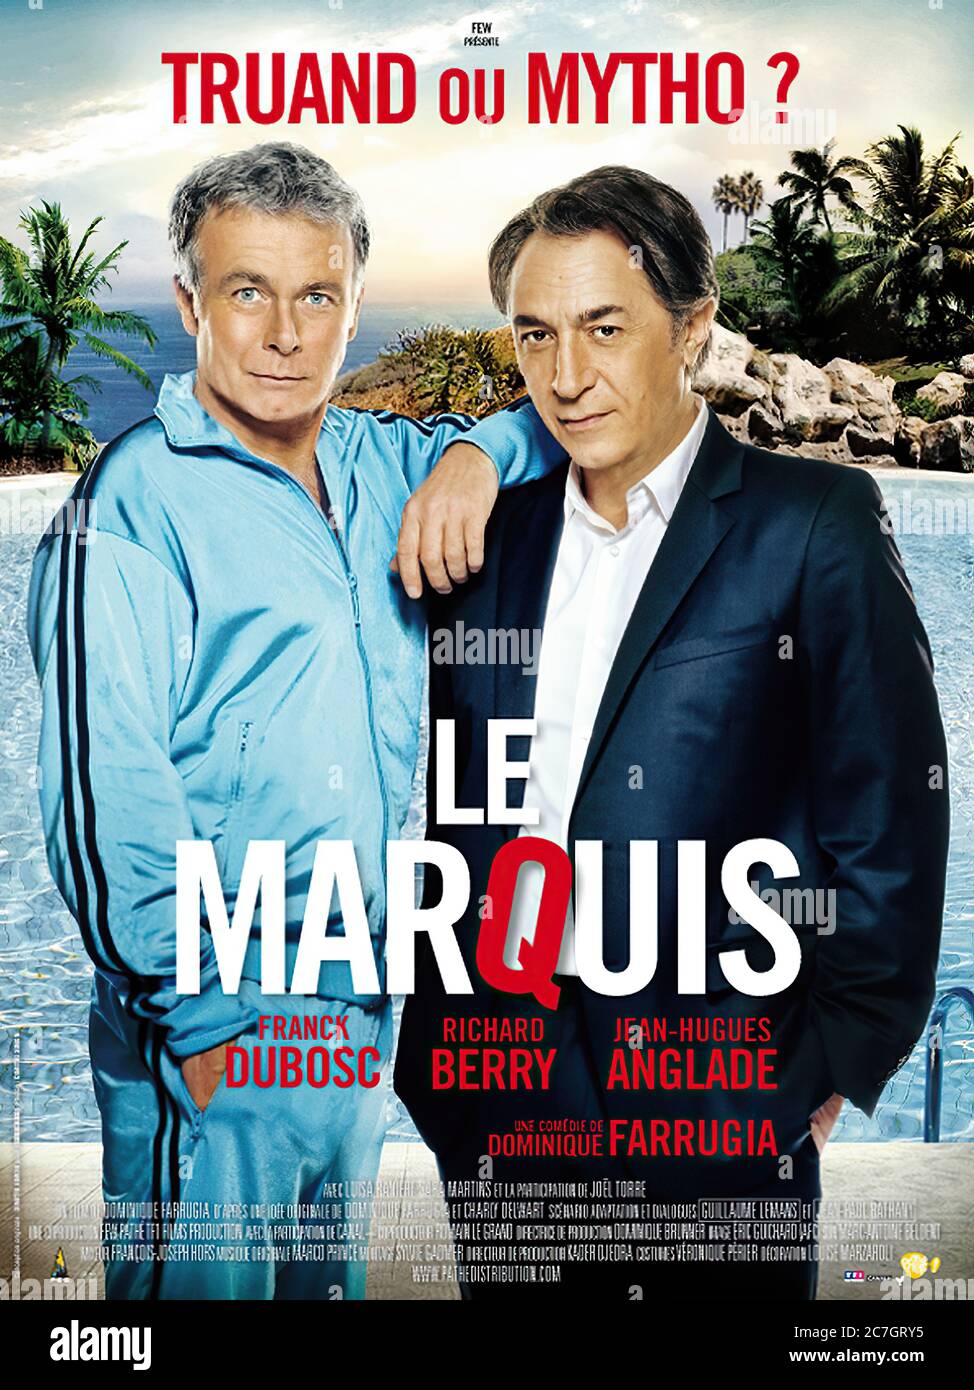 Le Marquis - Filmplakat Stockfoto